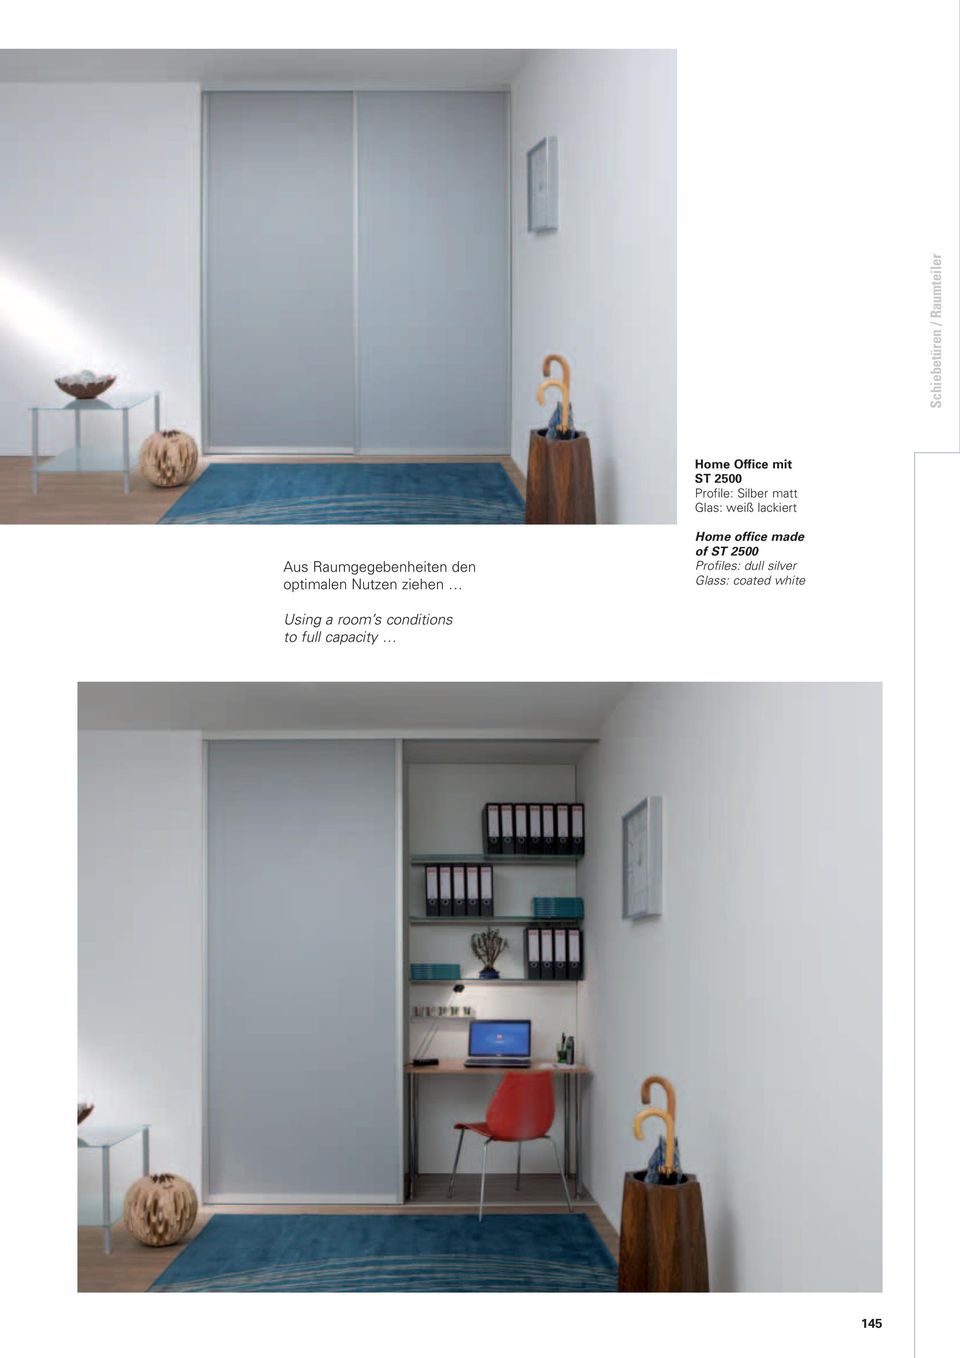 optimalen Nutzen ziehen Home office made of ST 2500 Profiles: